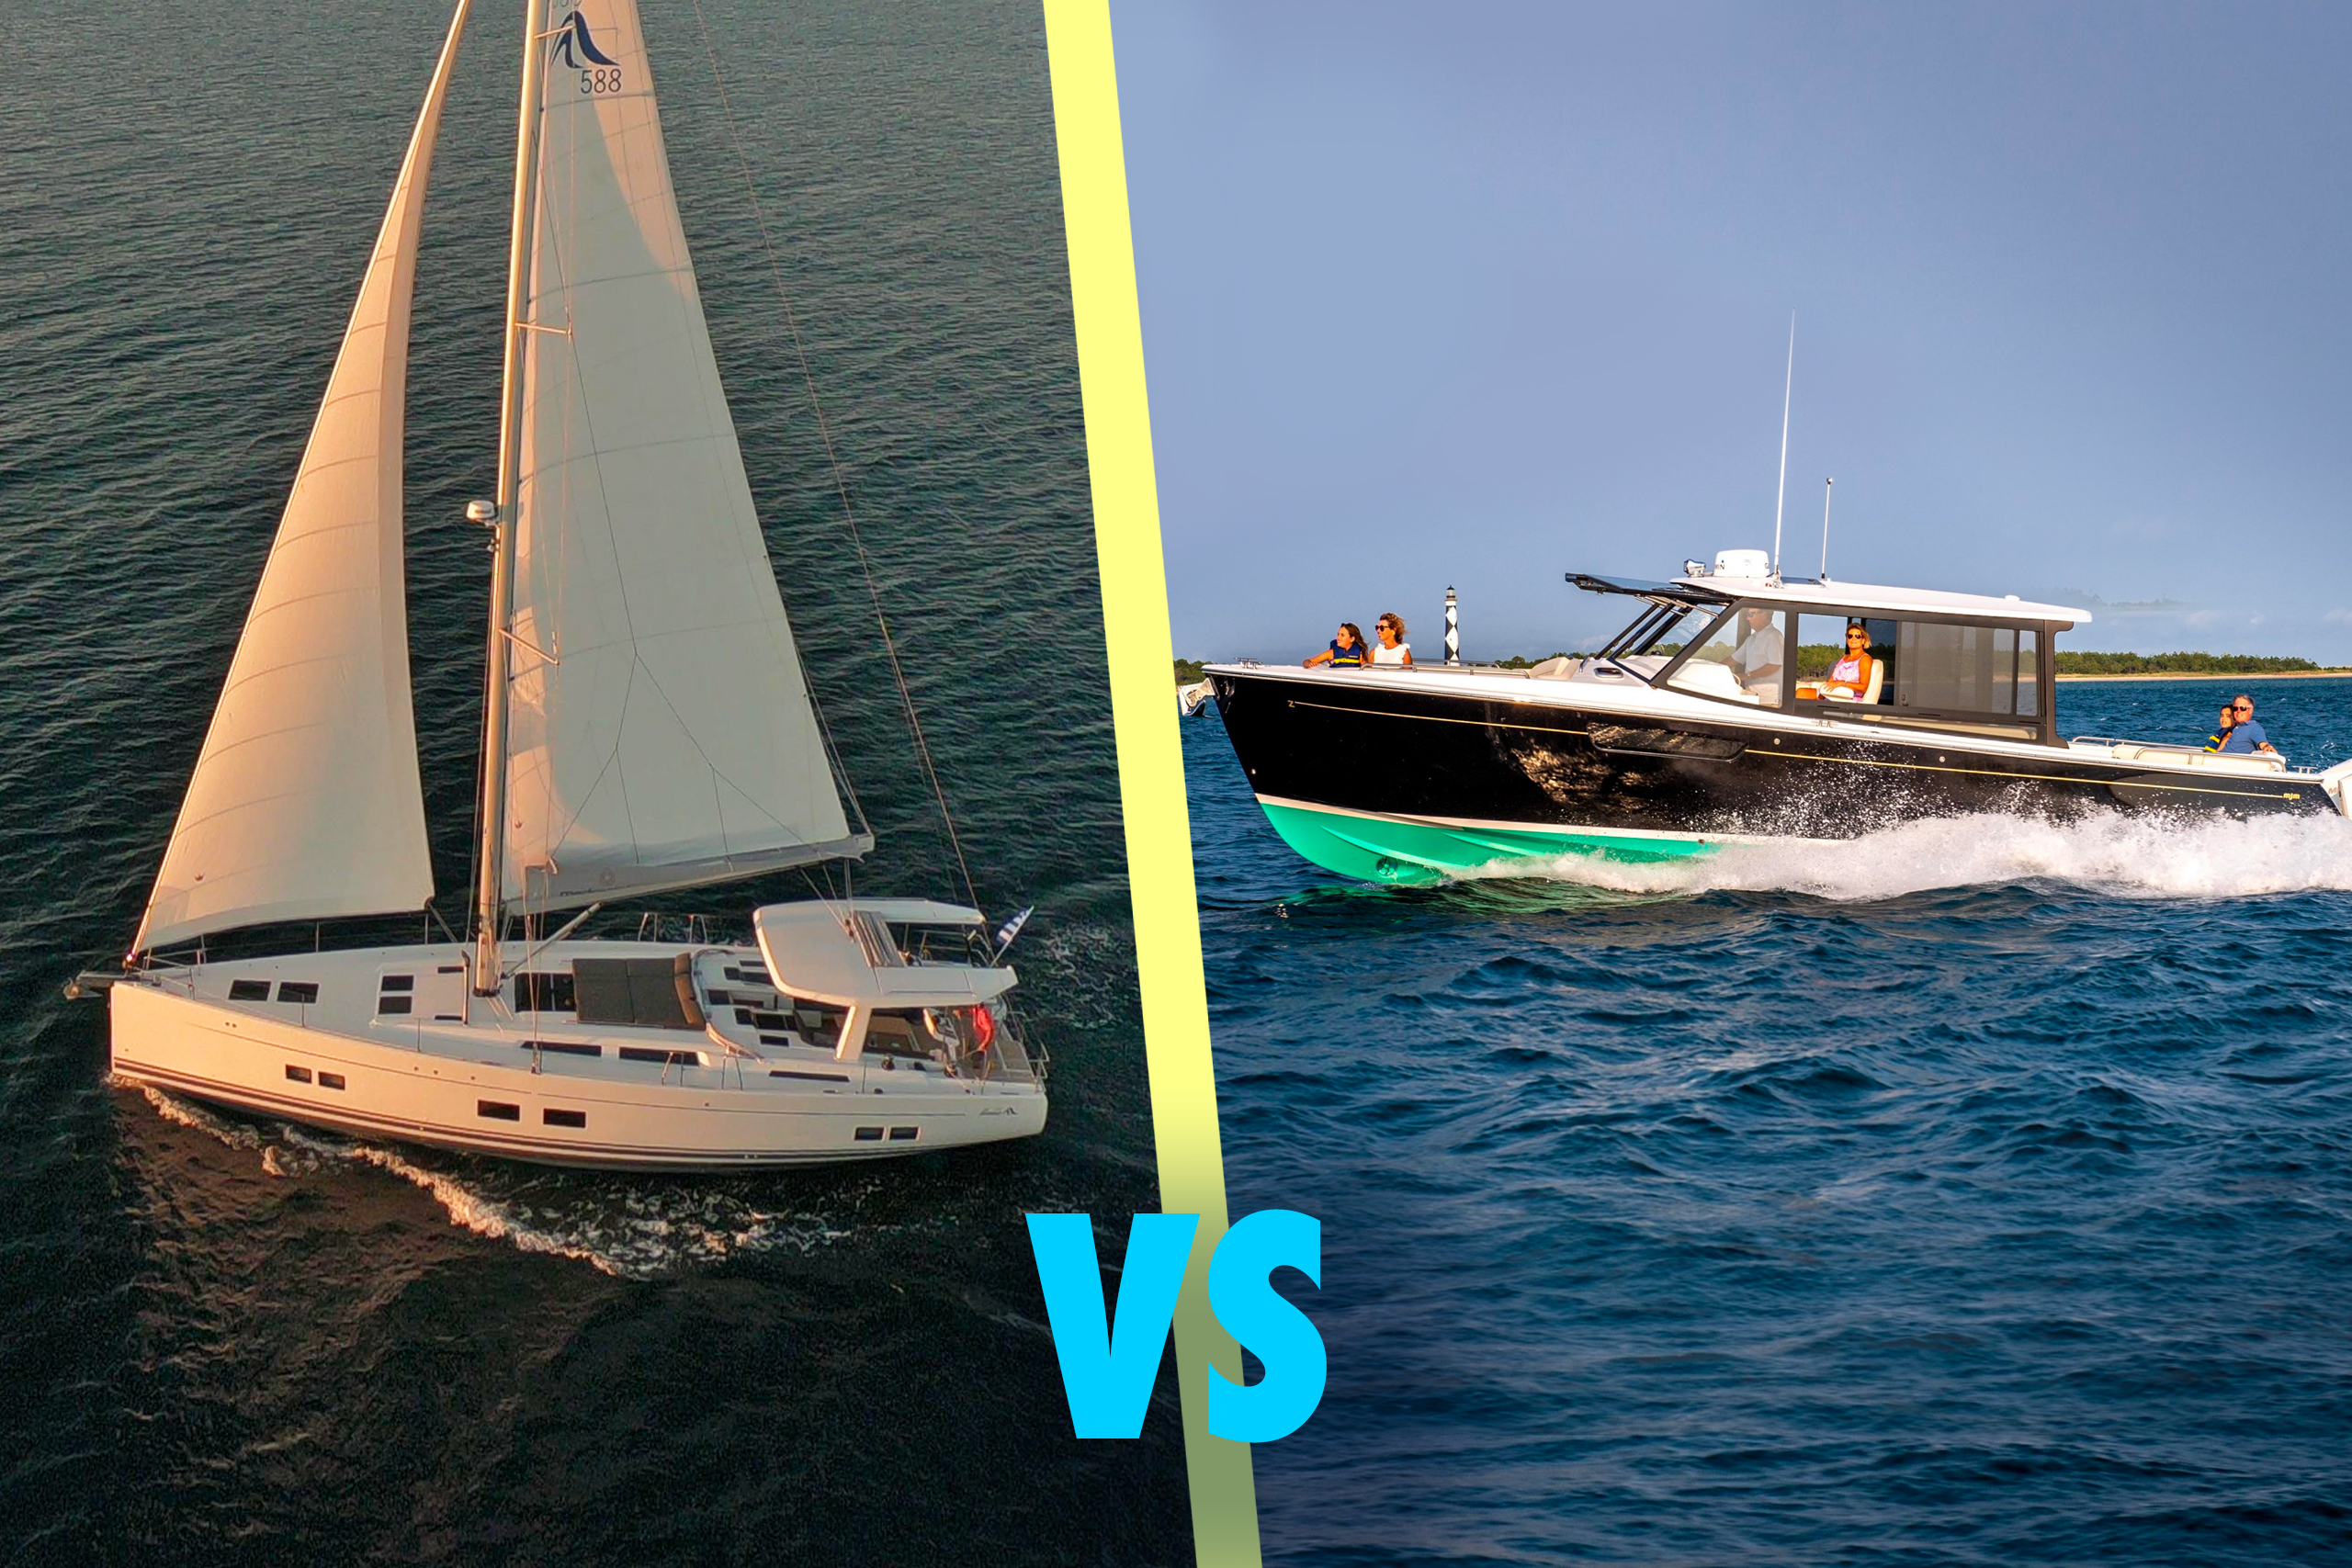 Sailboats versus powerboats